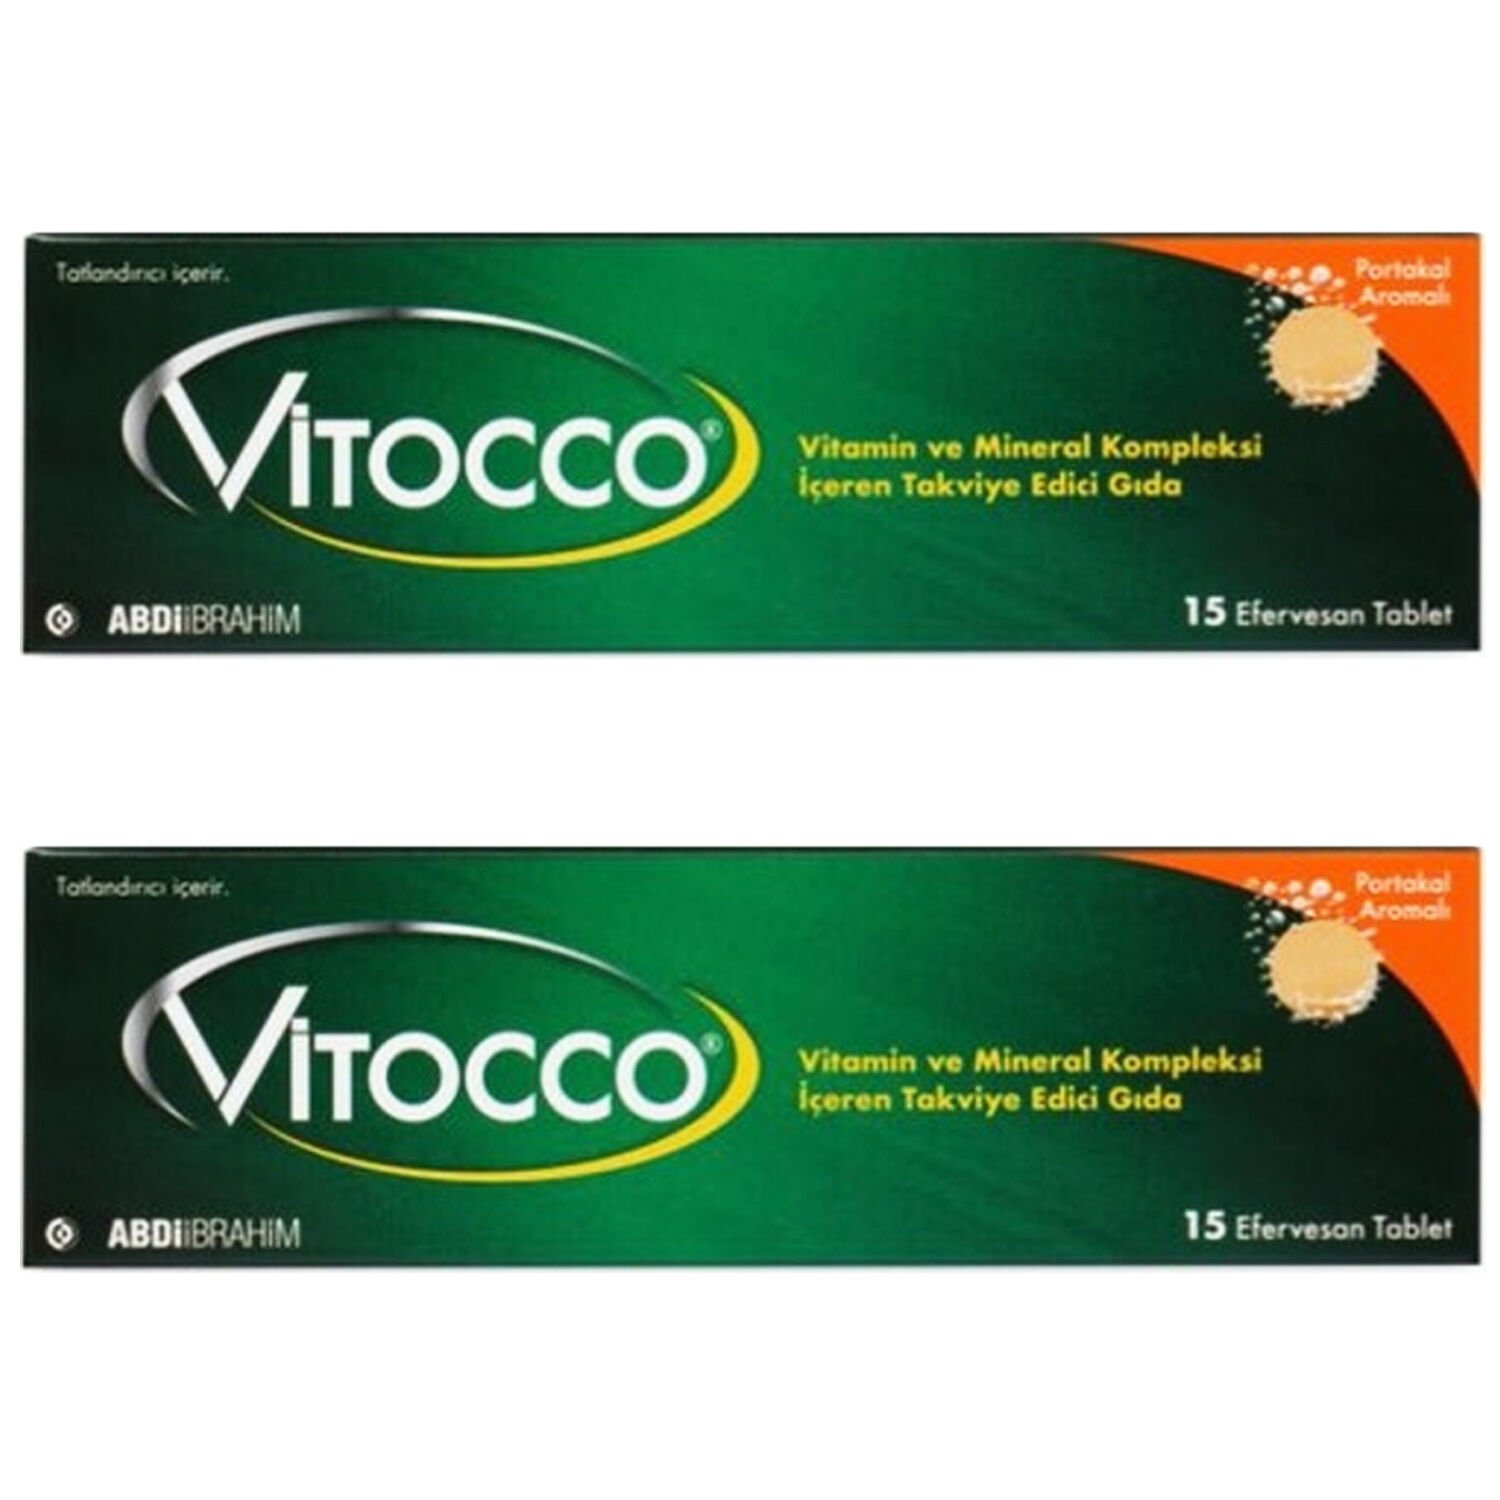 Vitocco Vitamin Ve Mineral Kompleksi 15 Efervesan Tablet 2 ADET